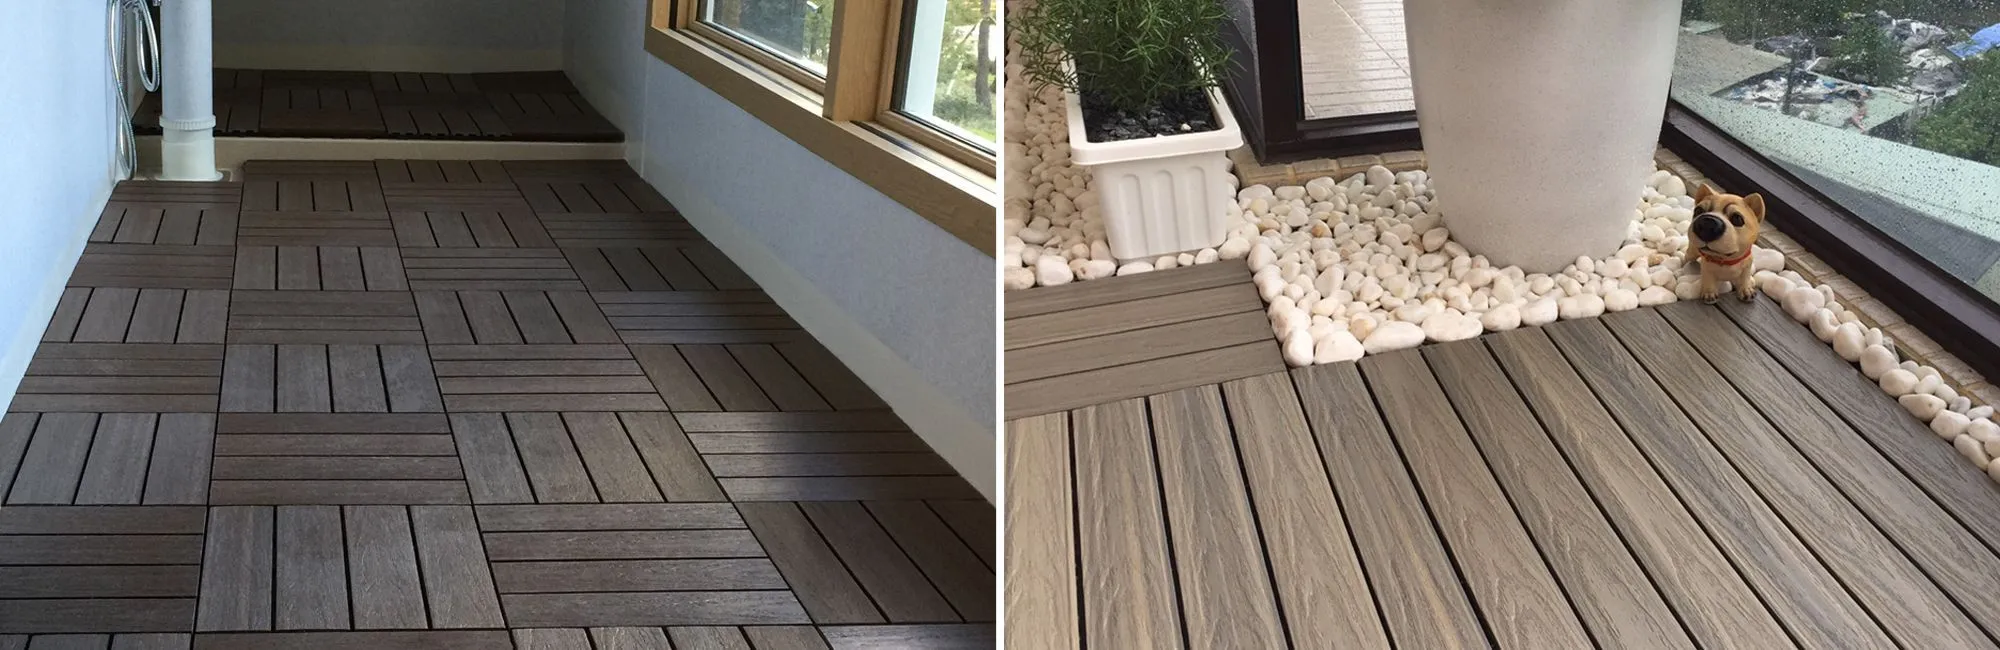 4 X 45cm Square Garden Wooden Decking Tiles Tile Boards 